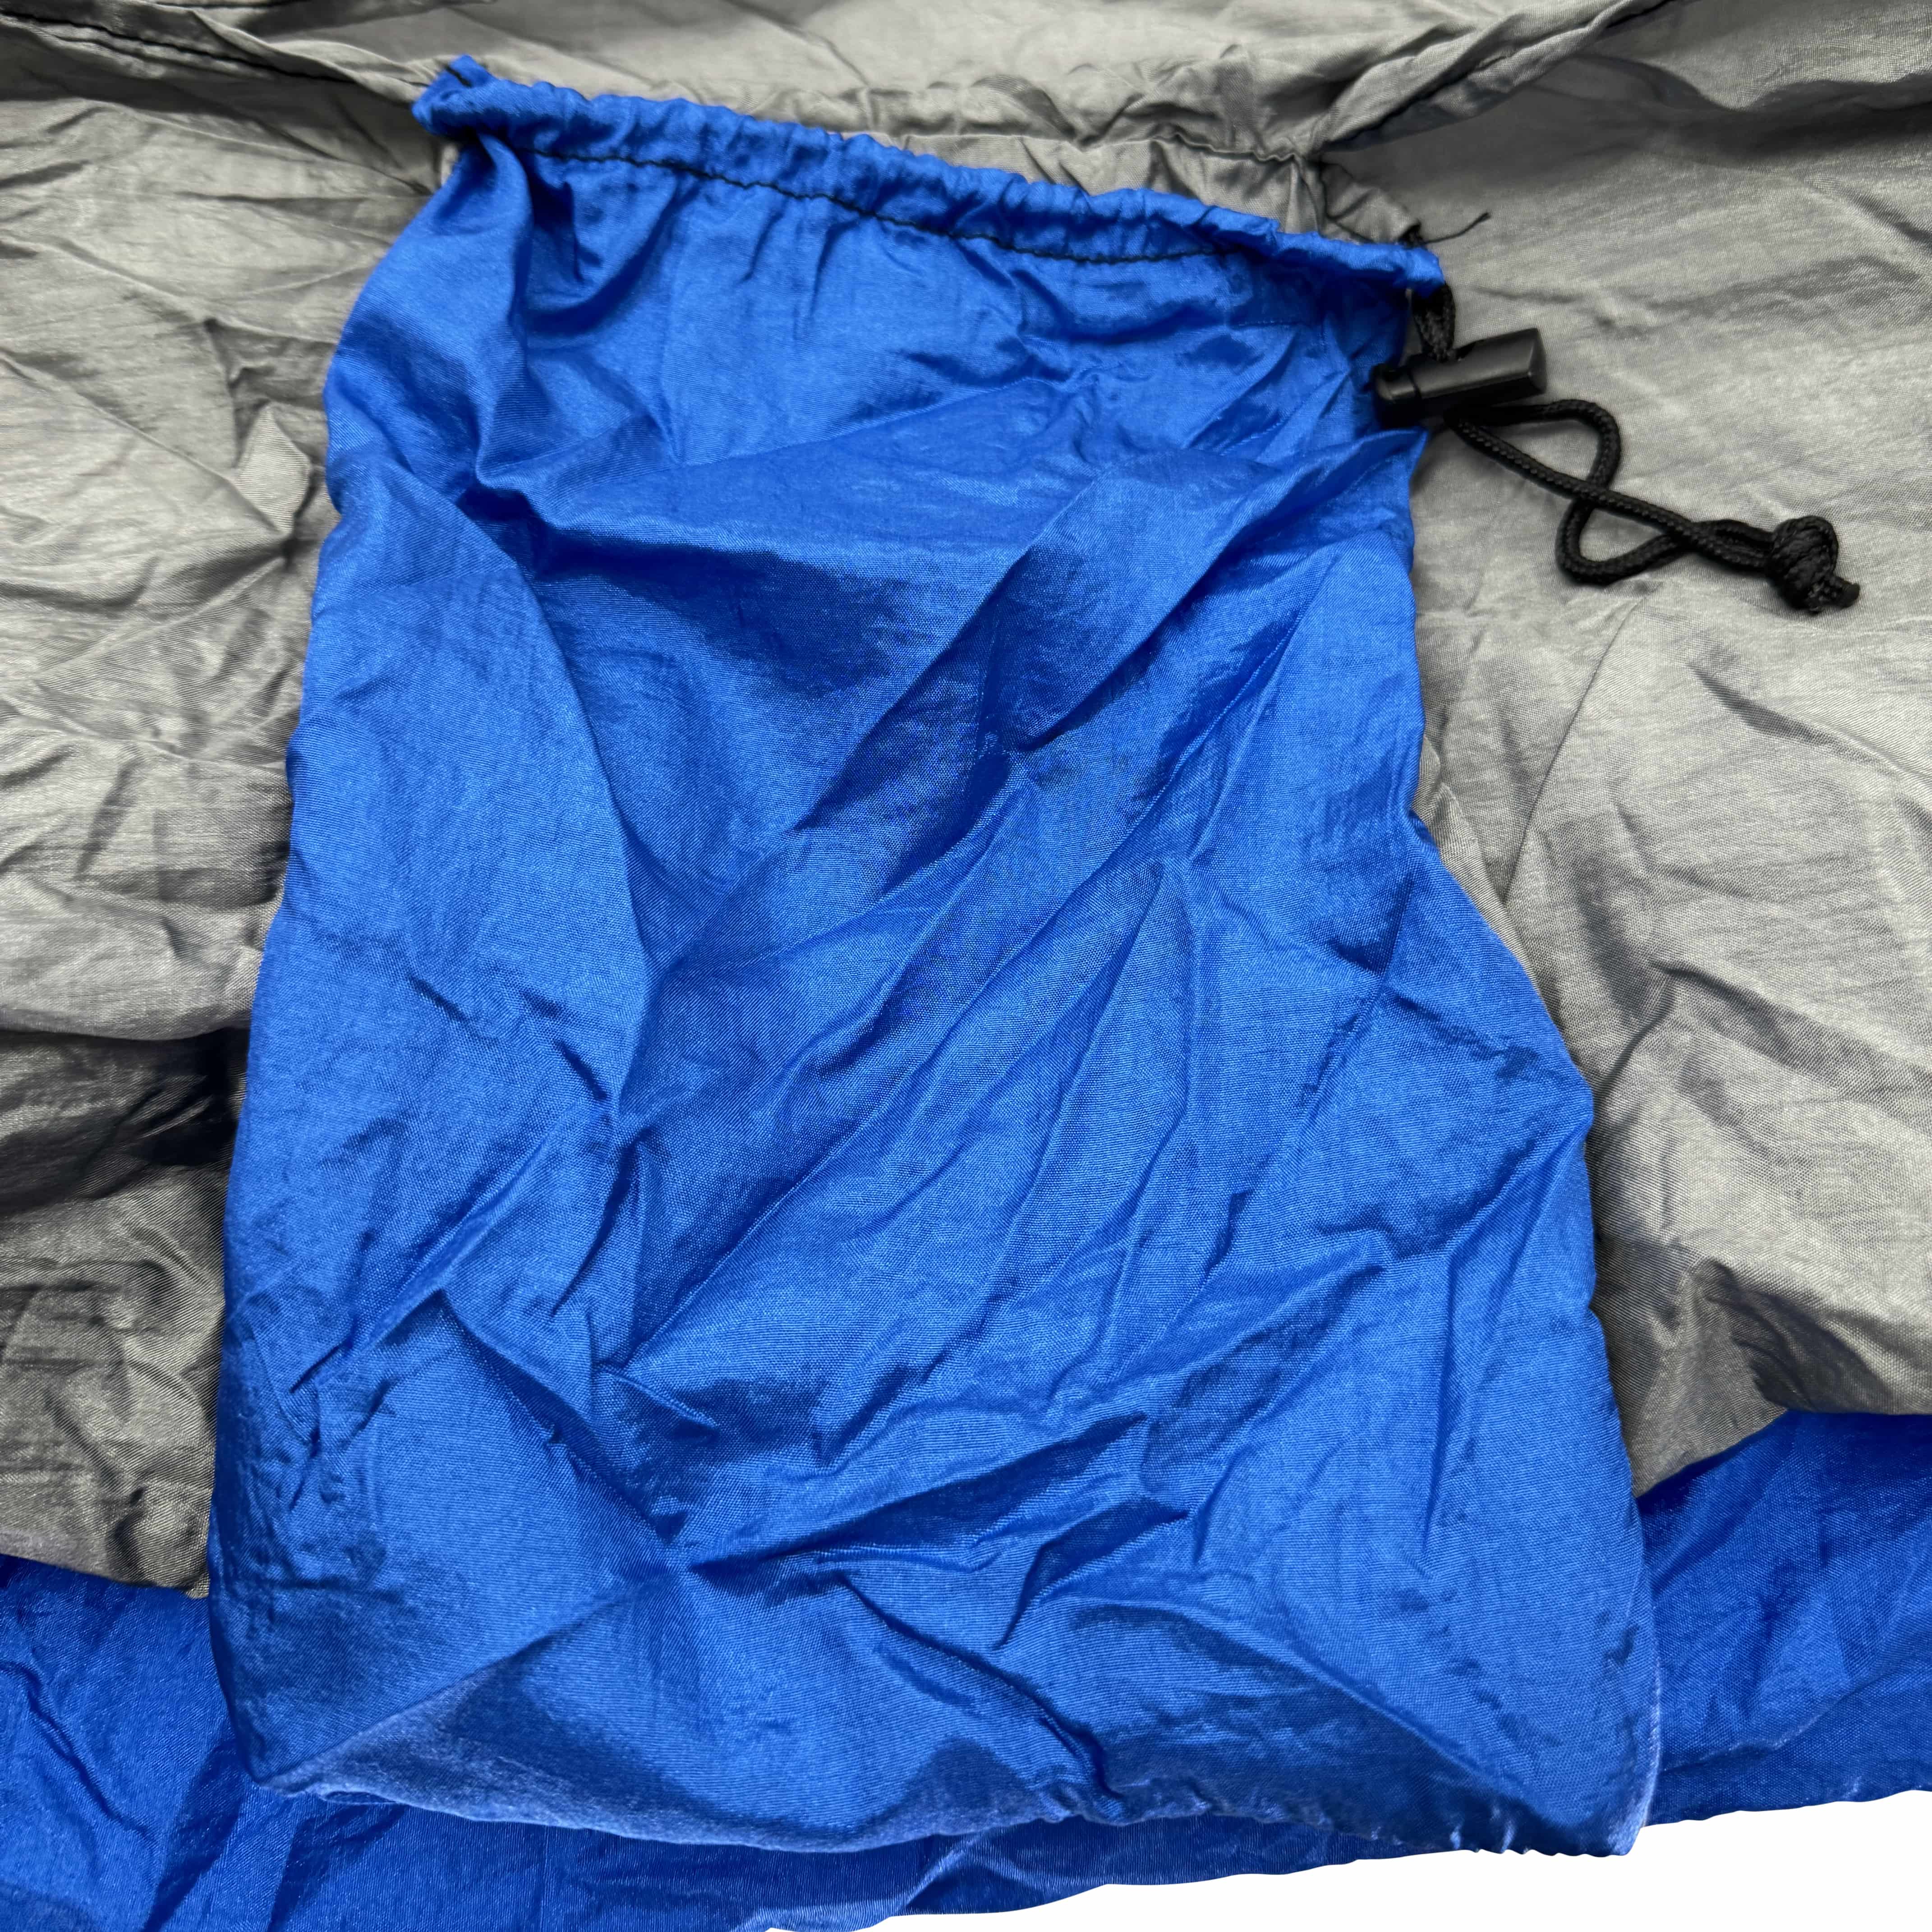 4gardenz Nylon Hangmat Blauw 270x150 cm met ophangset - max. 200 kg